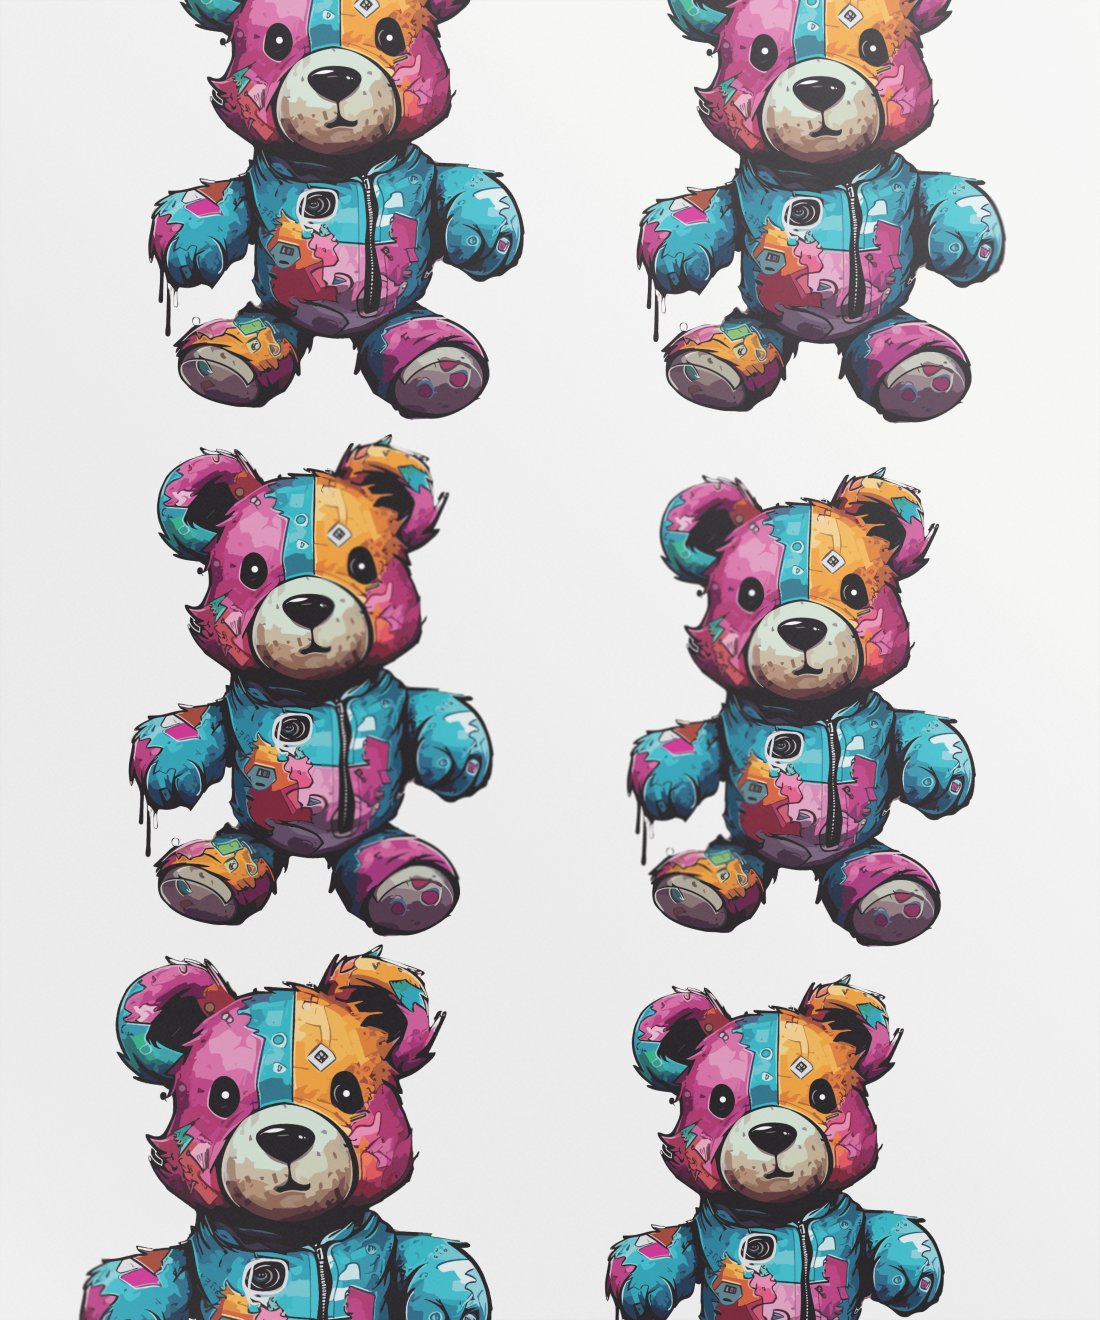 colorful-teddy-bear-image1